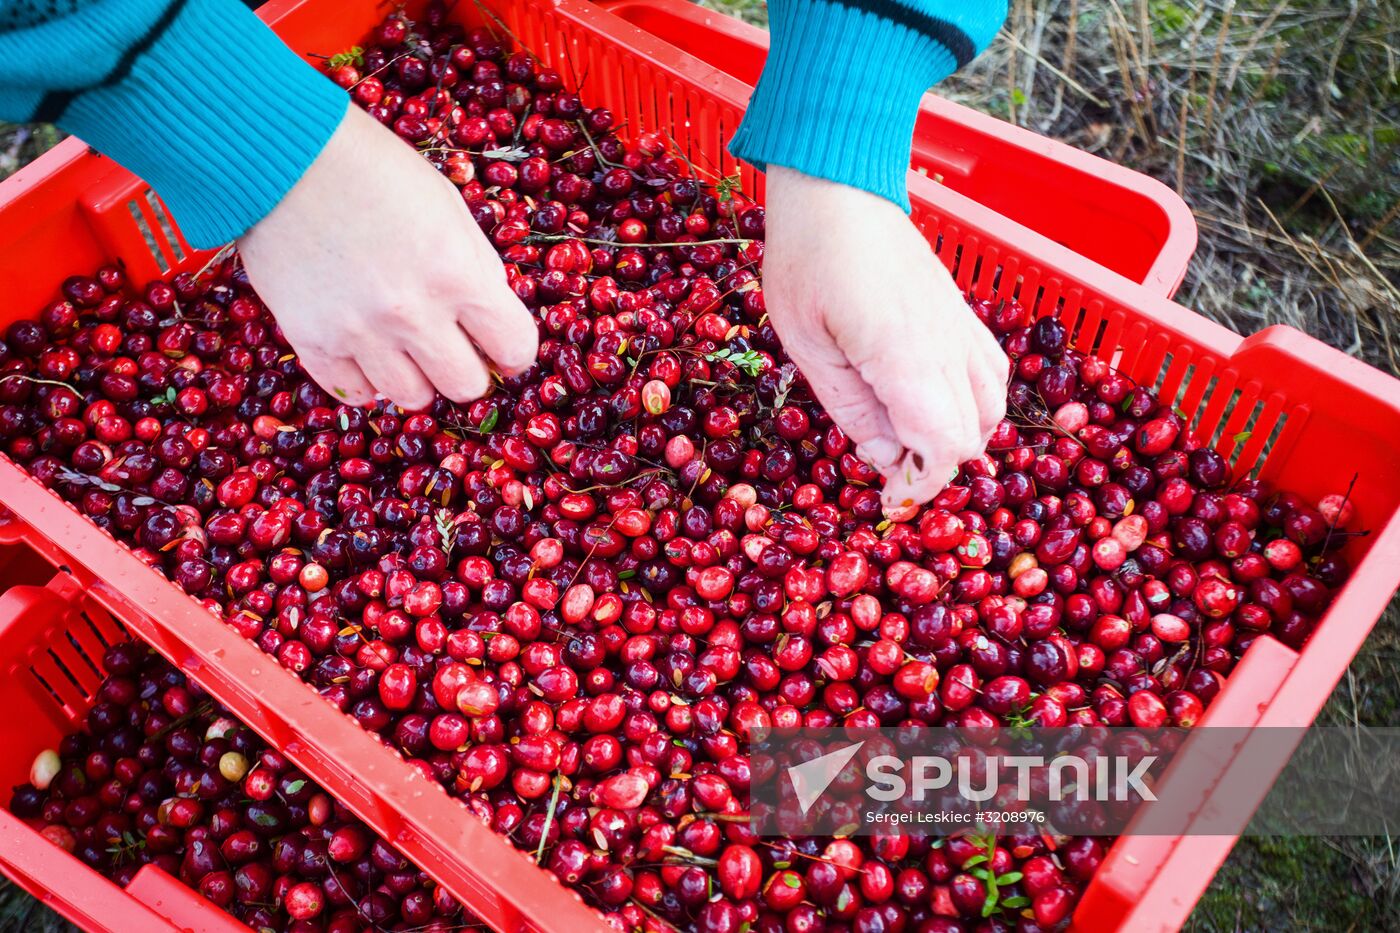 Collection of cranberries in Belarus